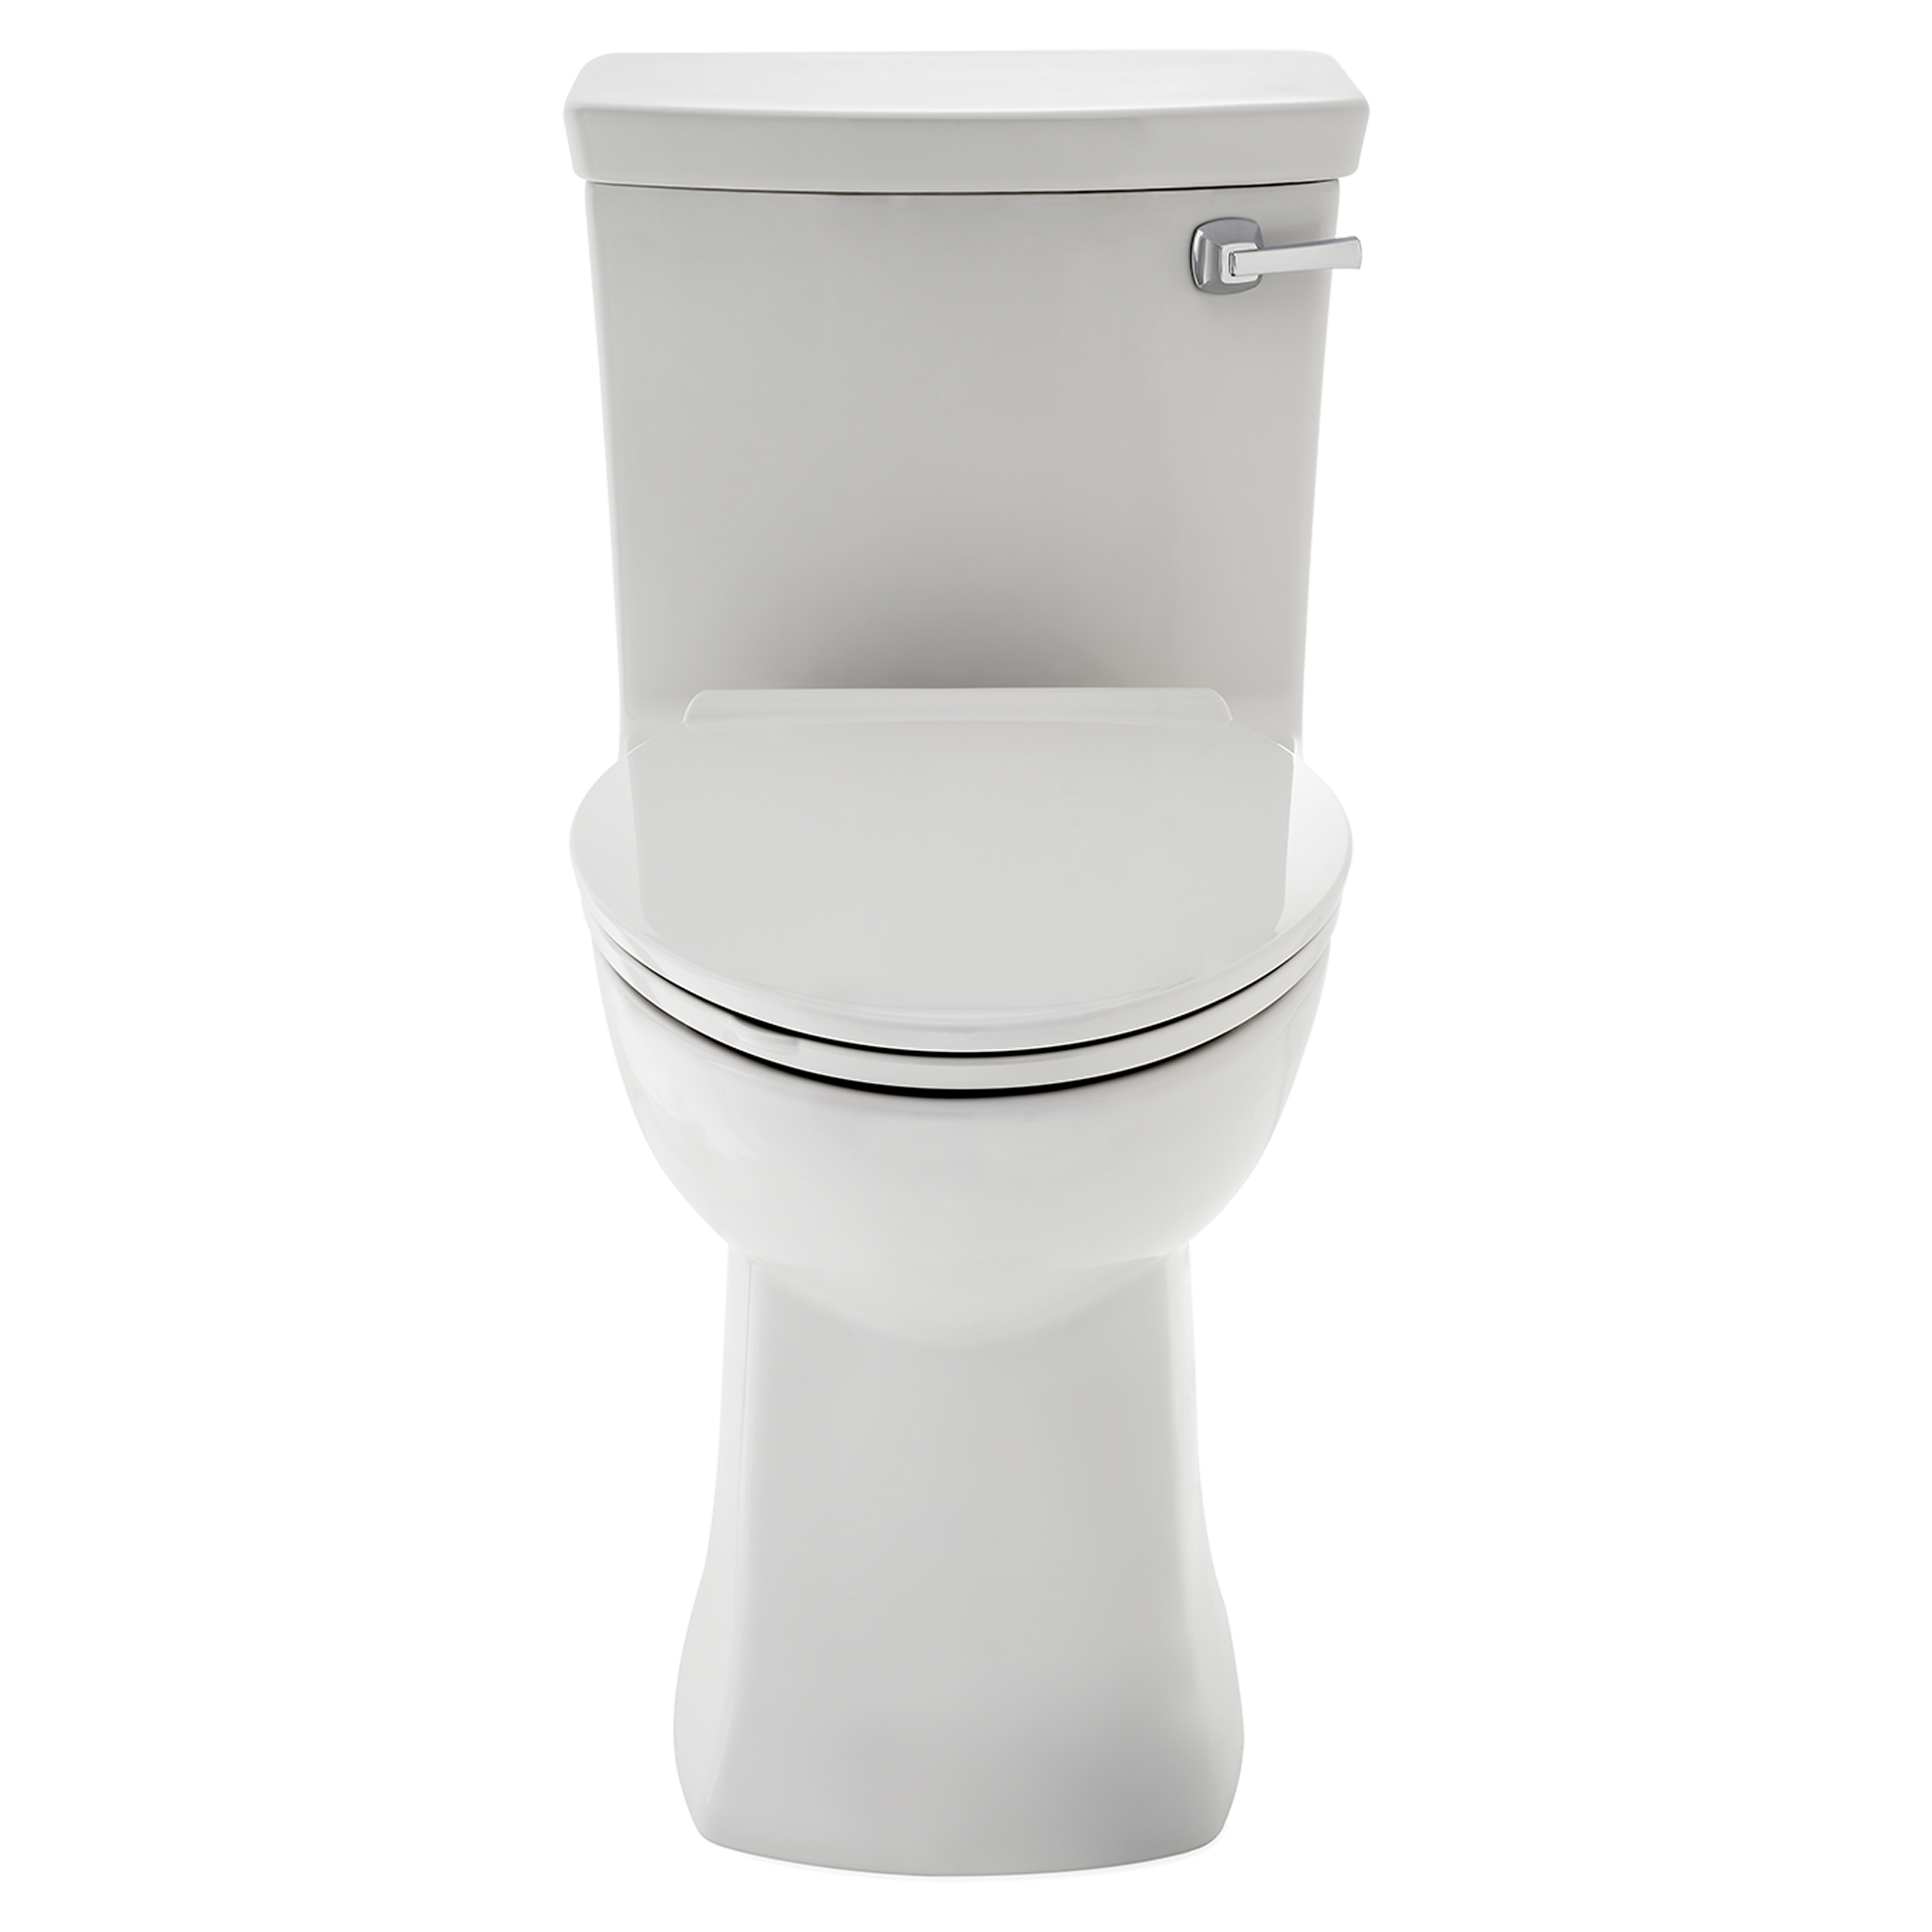 Toilet Seats Bidet Standard American Dual Flush Clipart